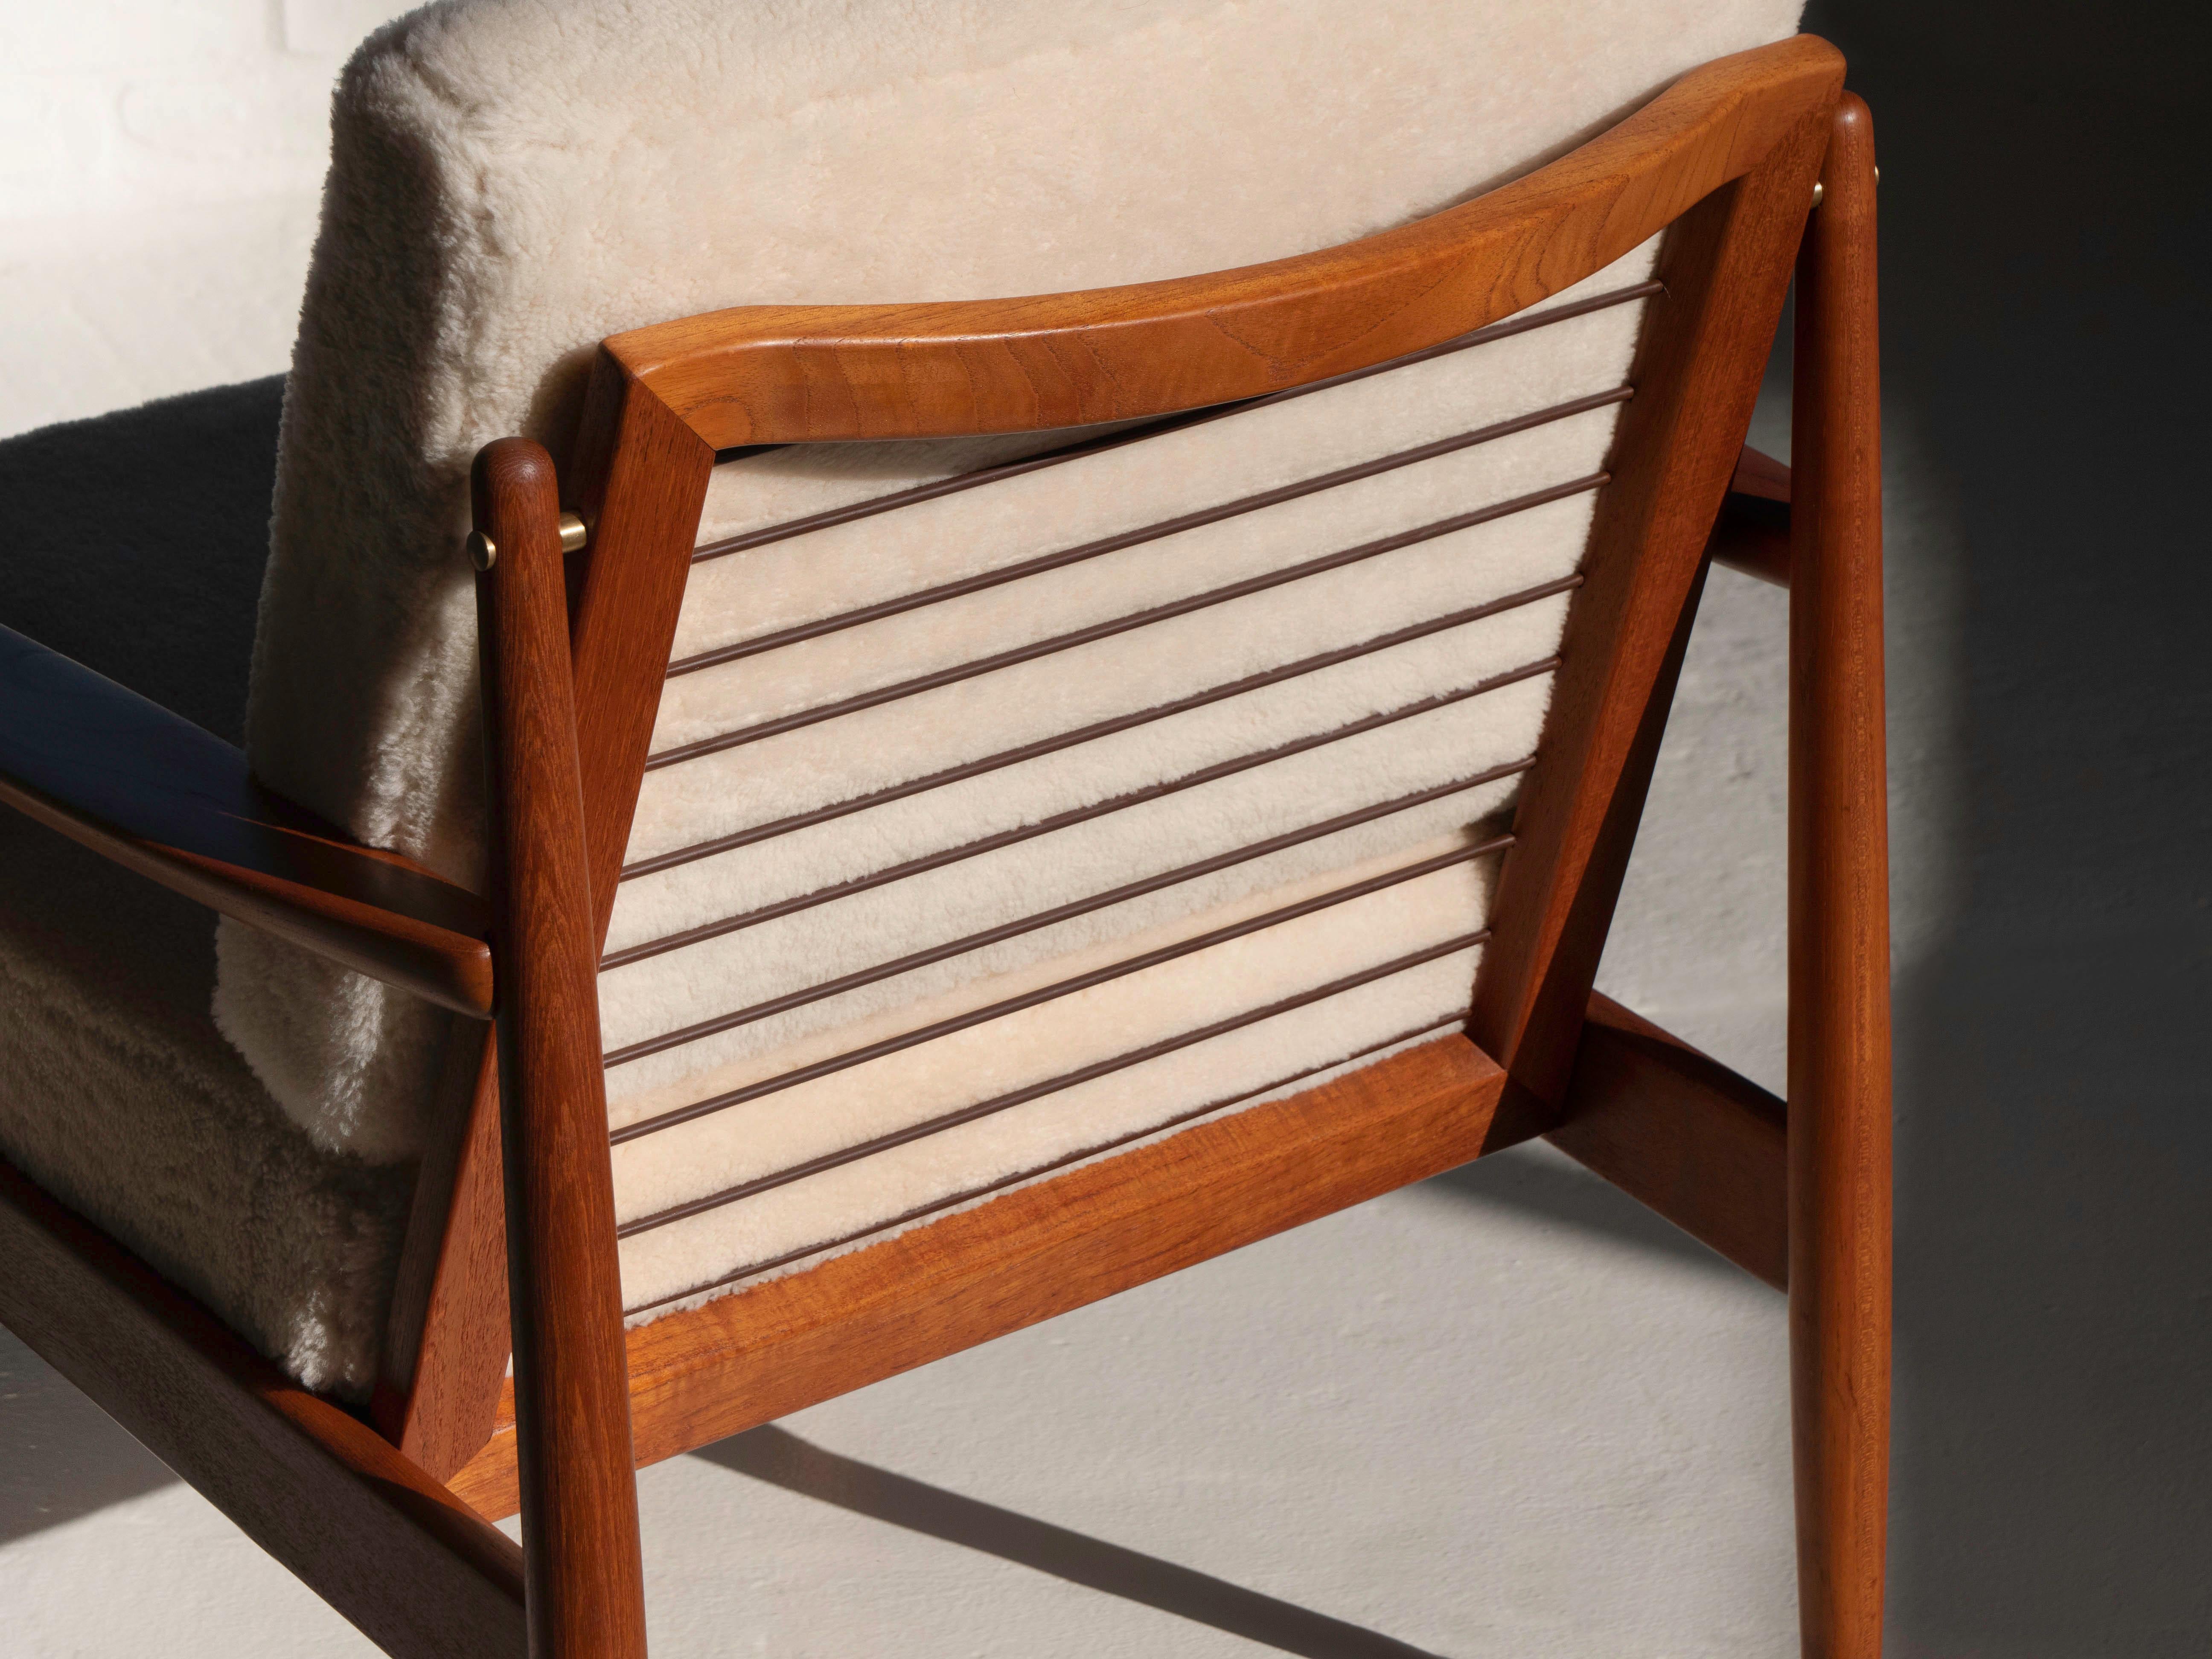 Svend Age Eriksen Genuine Shearling Lounge Chair for Glostrup Møbelfabrik 1960's For Sale 2